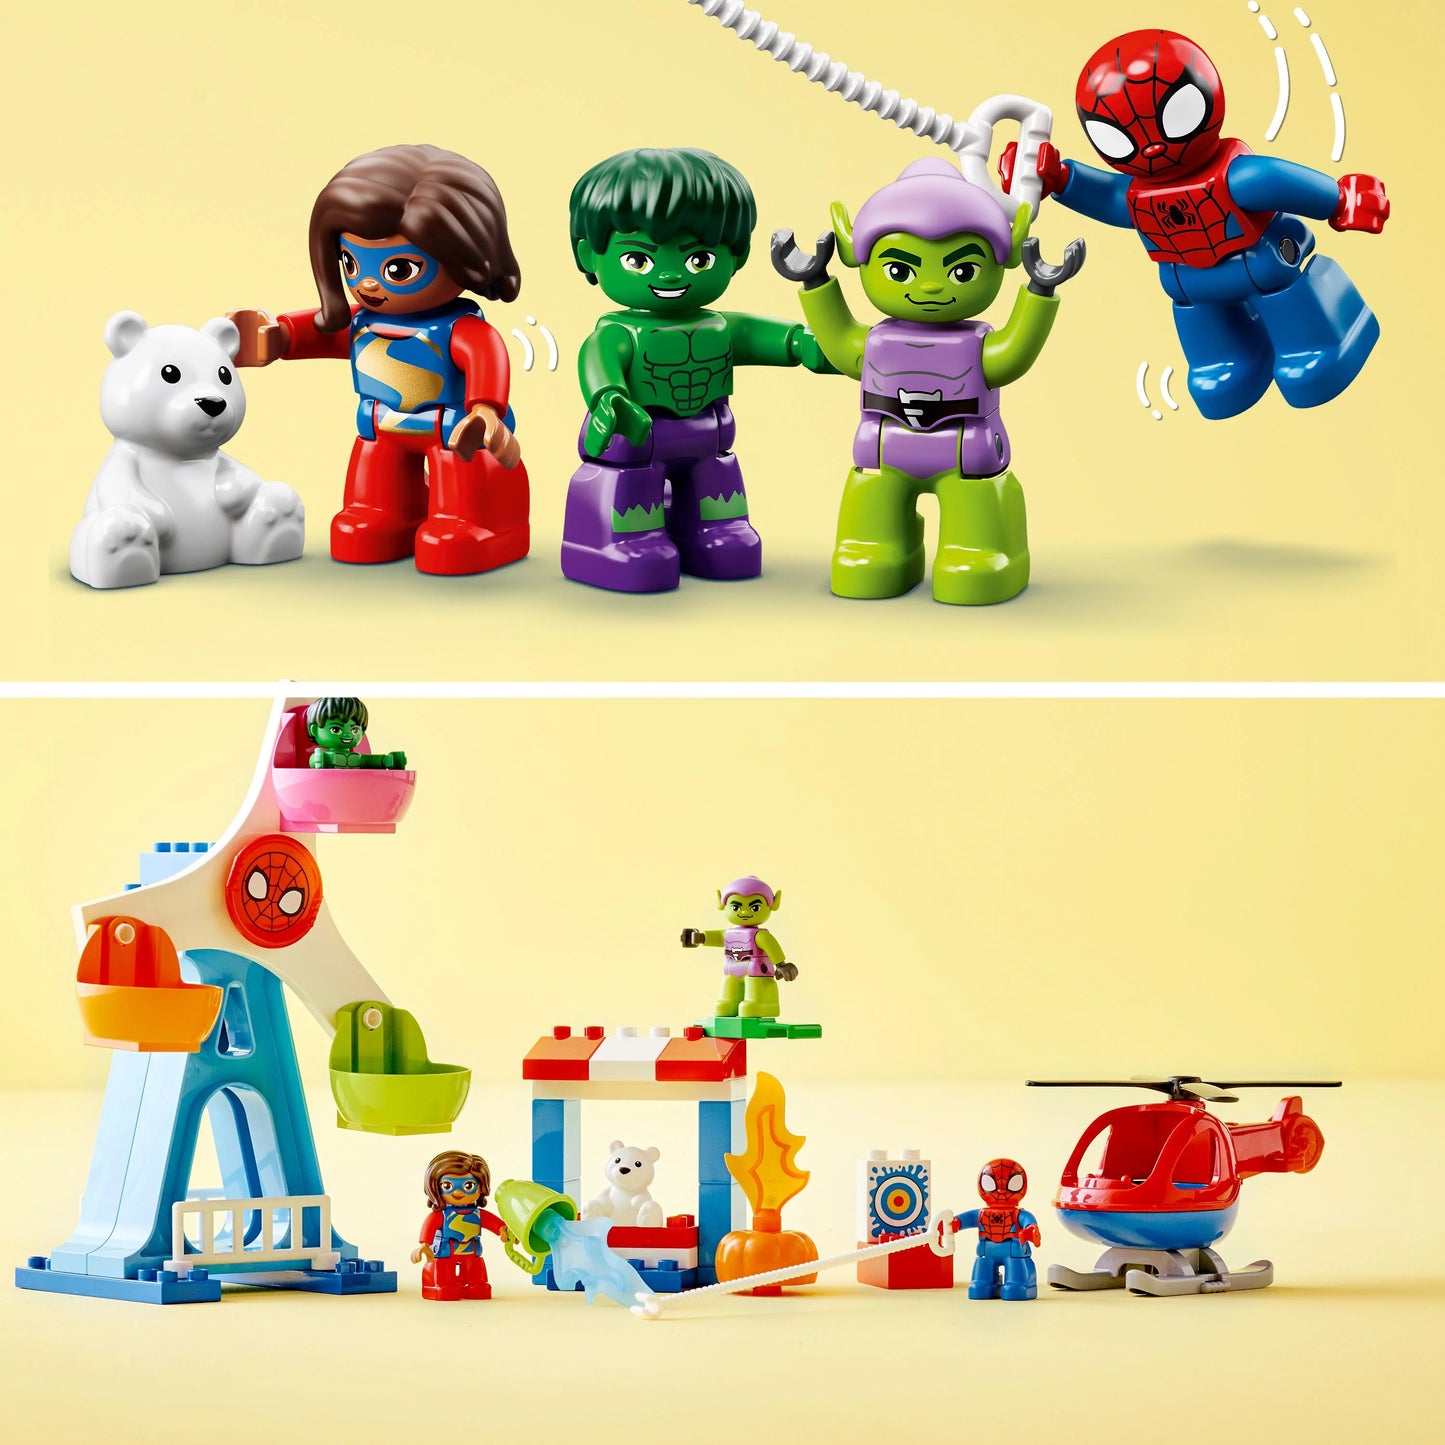 Spider-Man &amp; Friends: Carnival Adventure LEGO Duplo